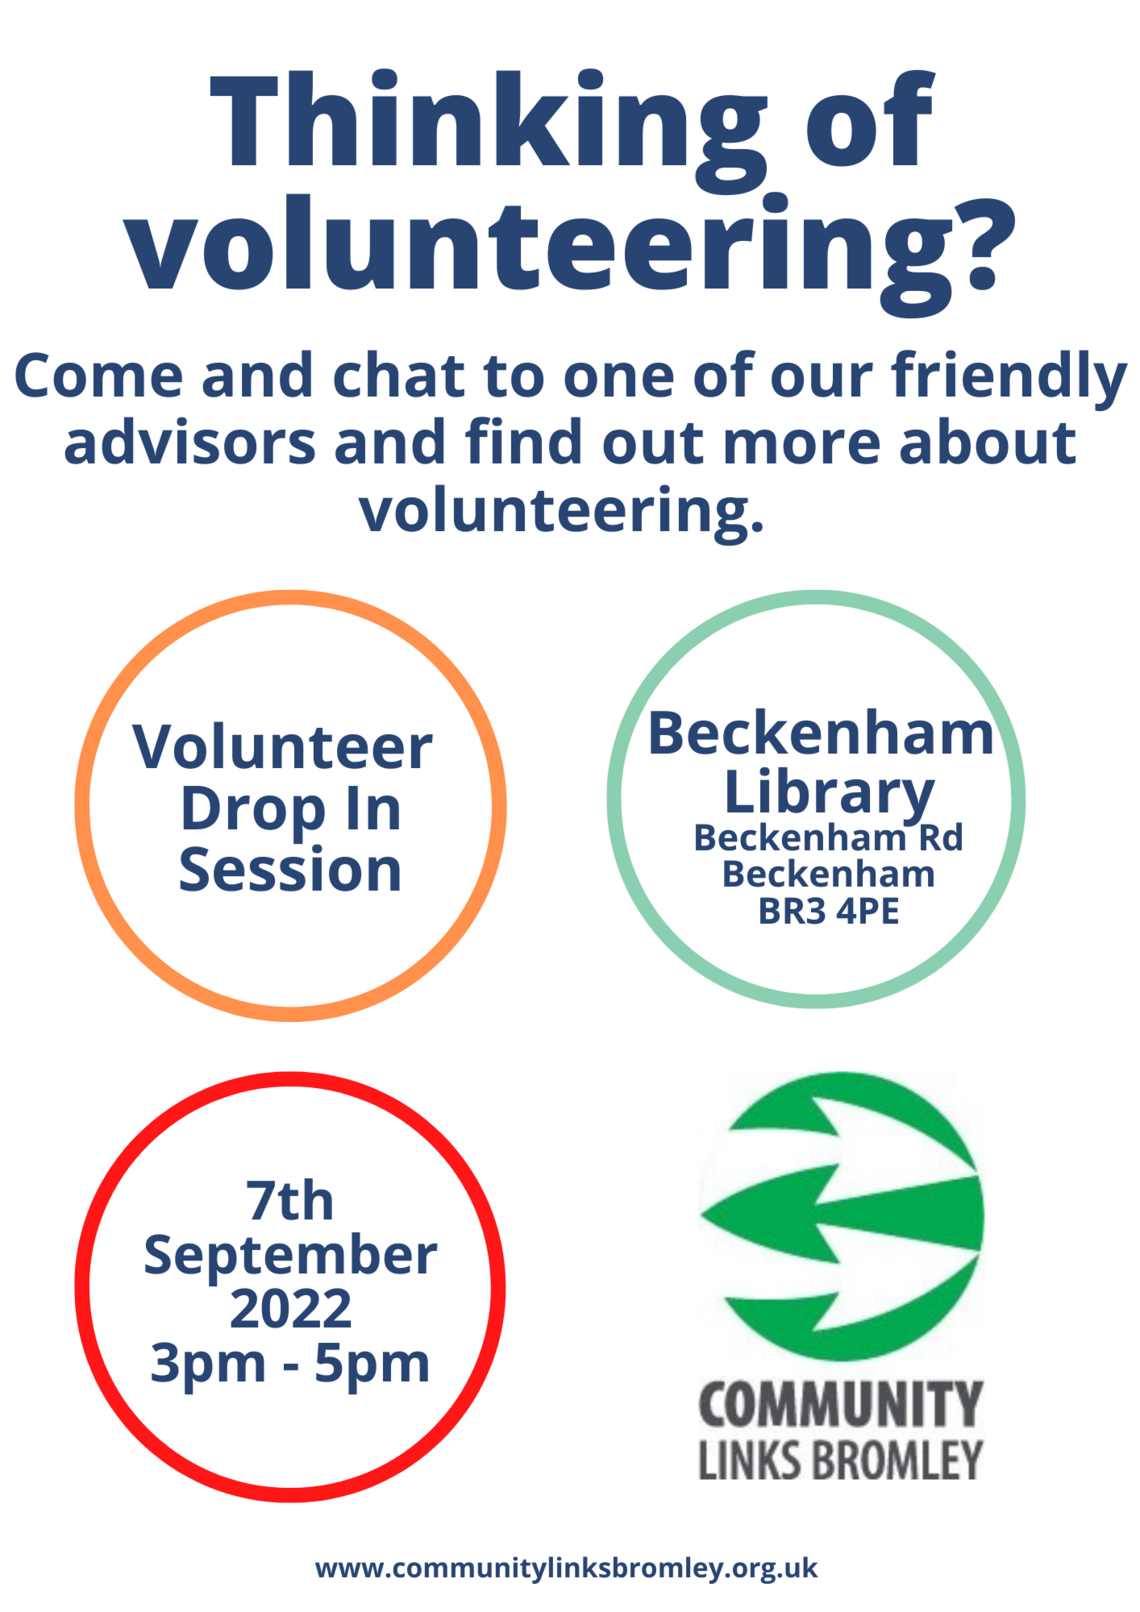 Thinking of Volunteering (Beckenham Library) Poster